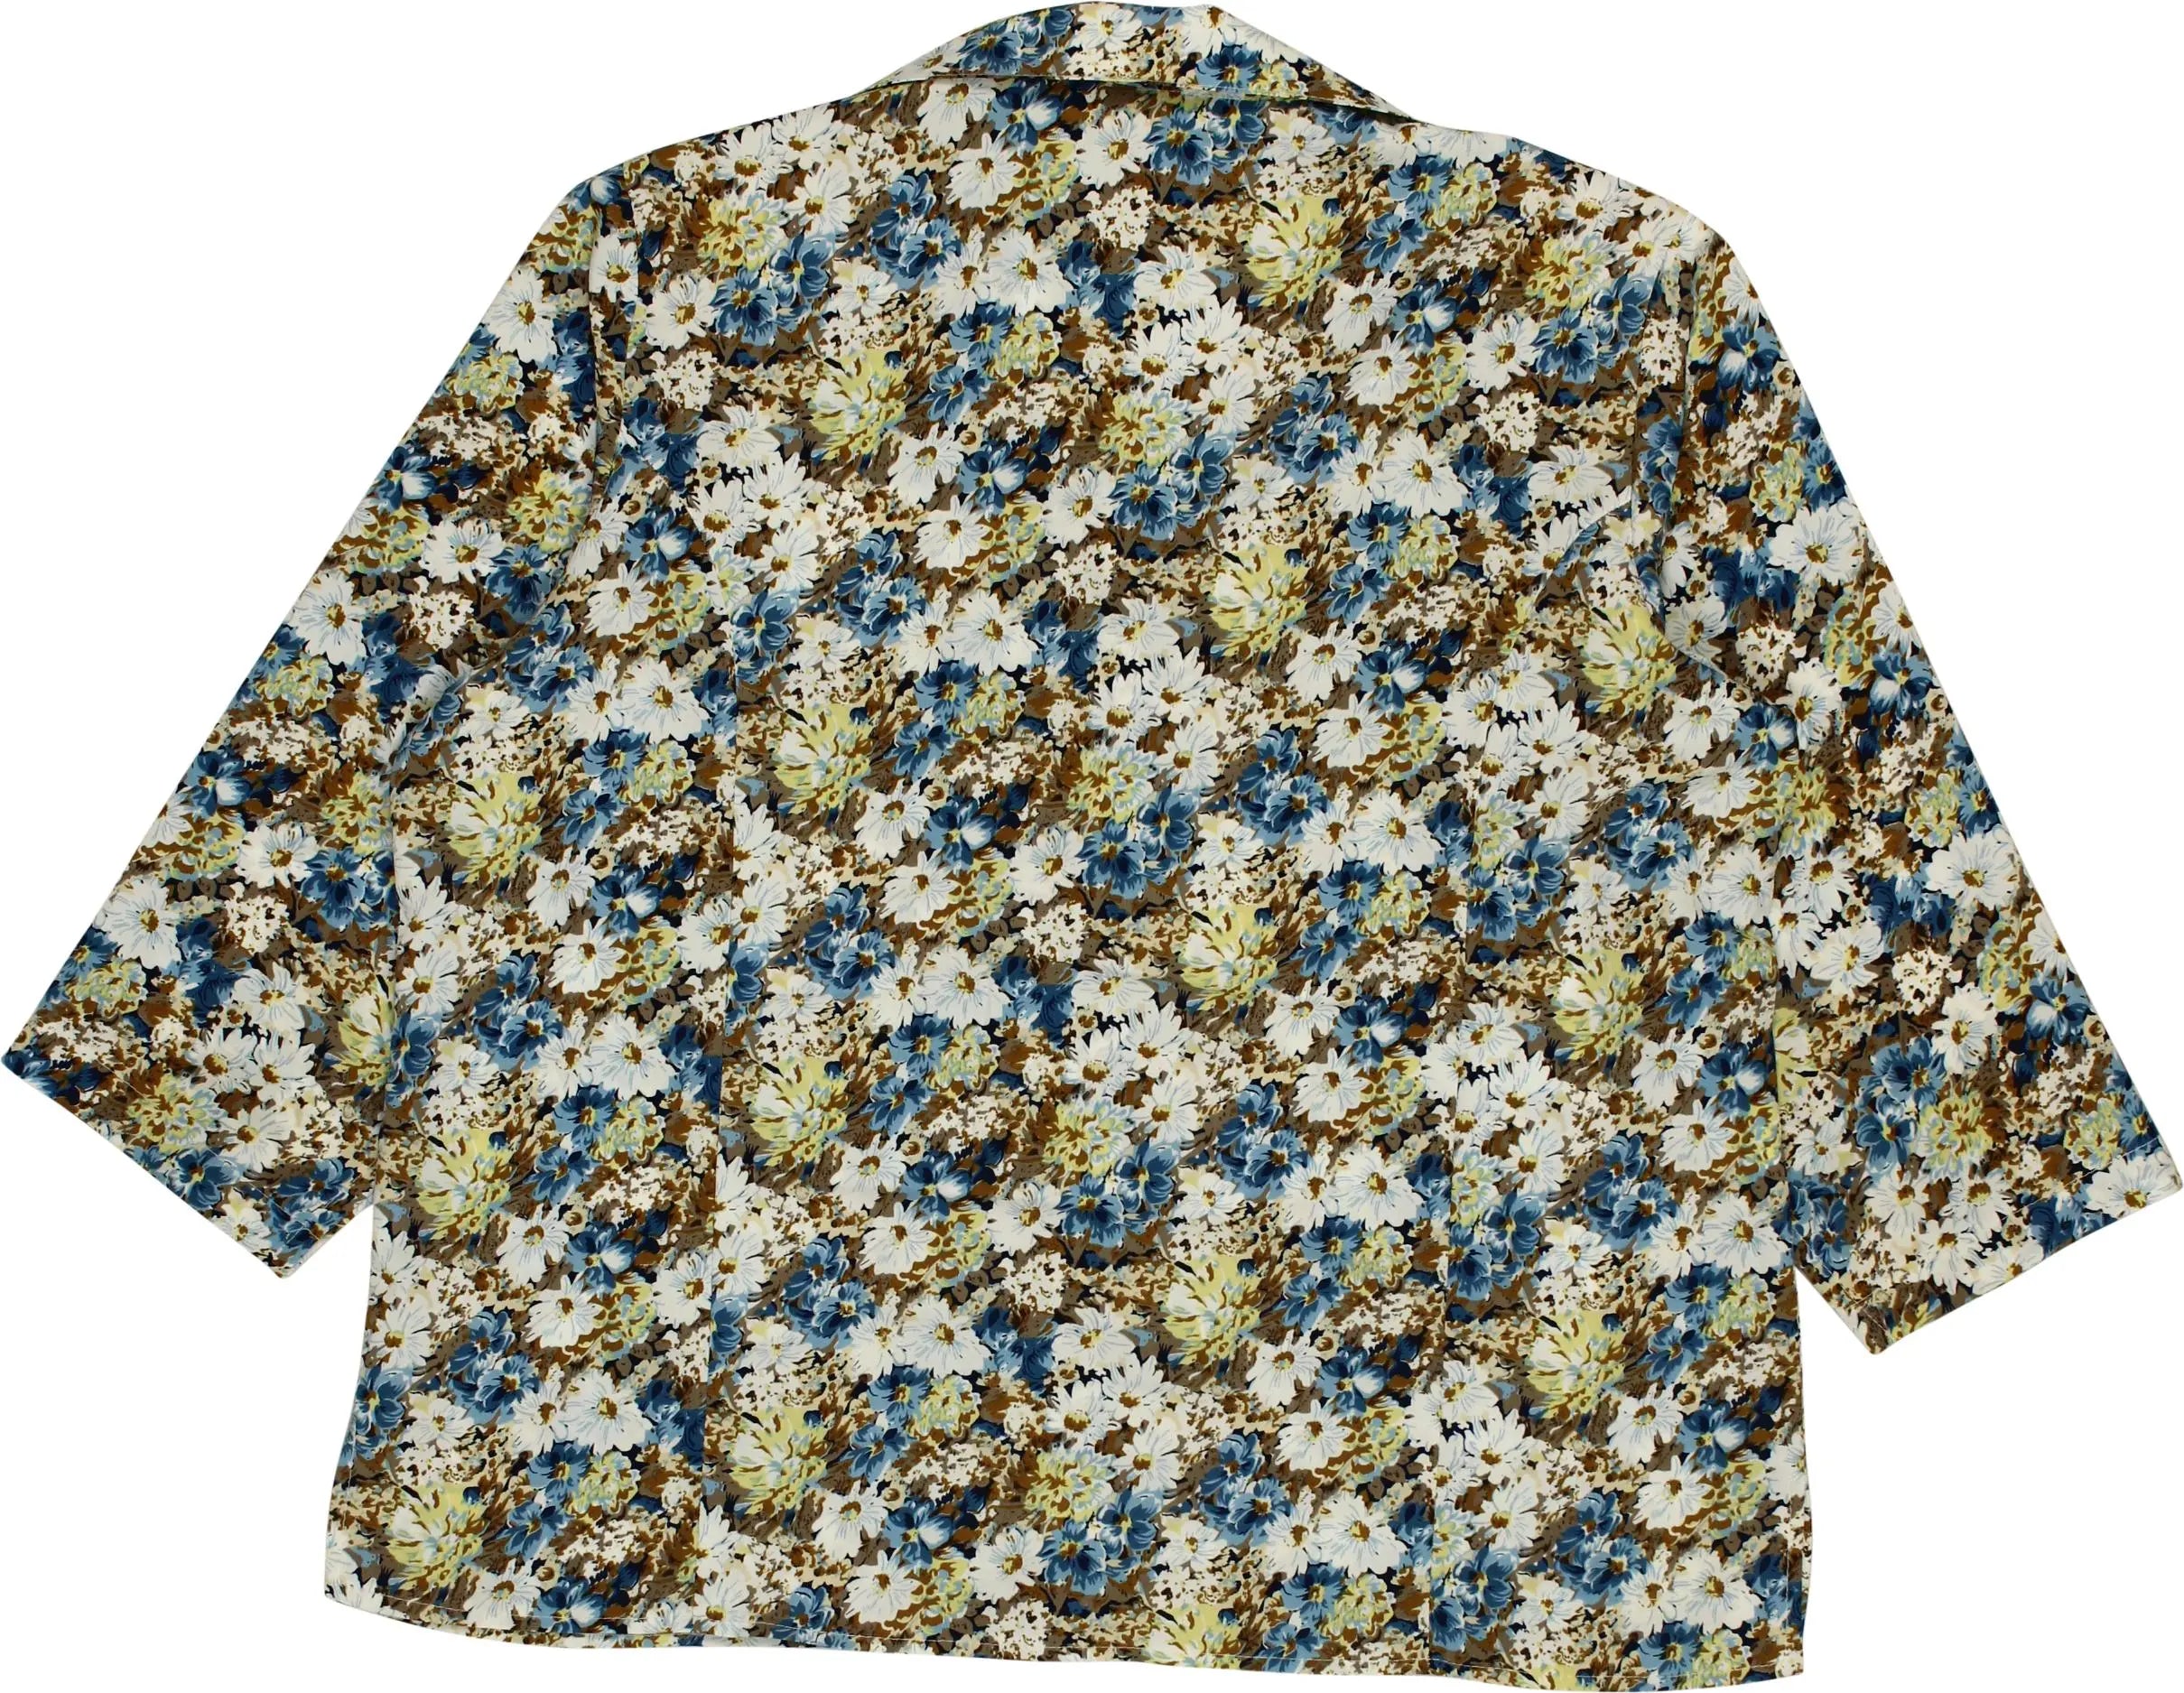 Ladyz Combi - Floral Blouse- ThriftTale.com - Vintage and second handclothing